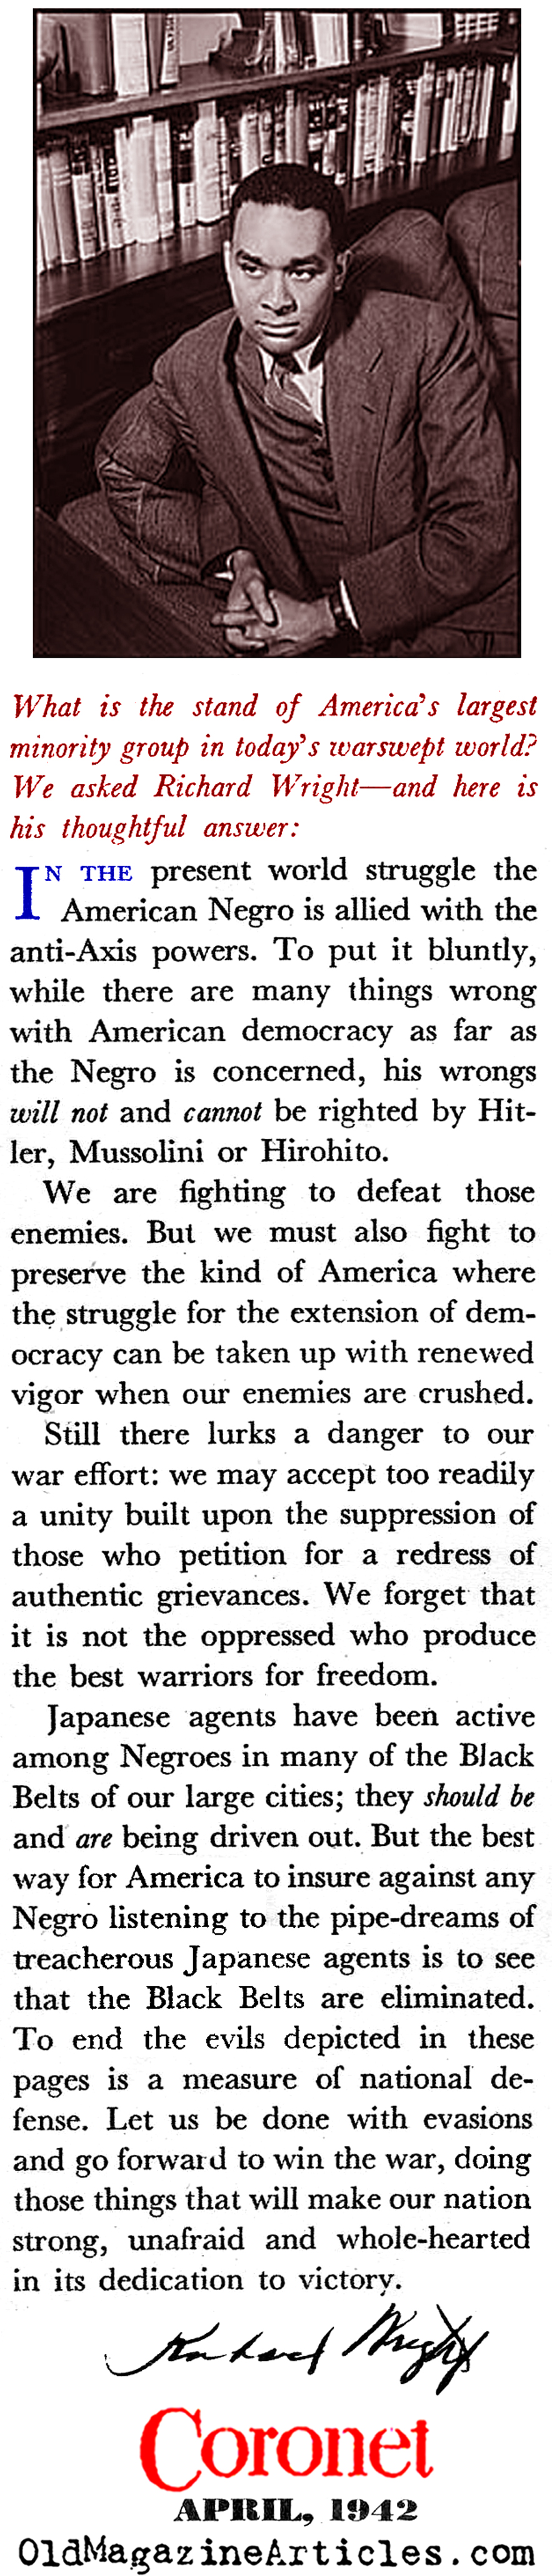 Richard Wright on the Black Home Front (Coronet Magazine, 1942)